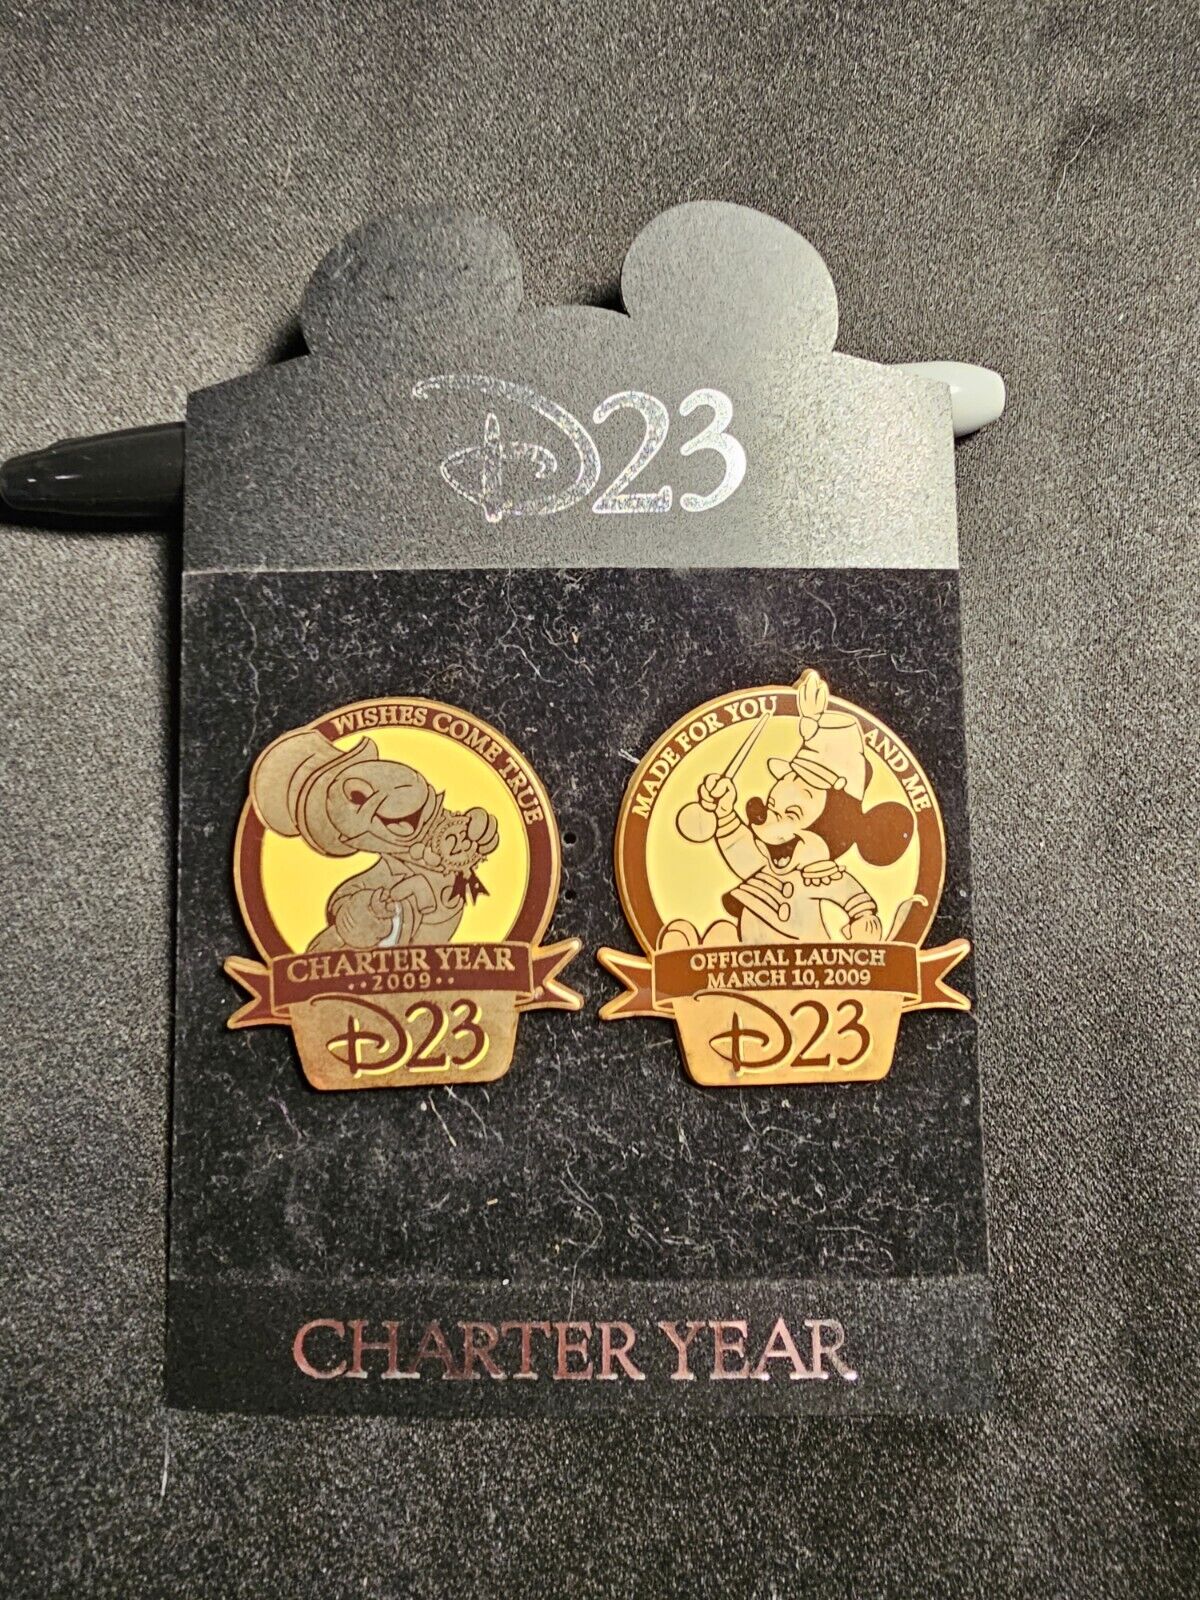 2009 Walt Disney Company 2009 Annual Meeting Exclusive Pin w/ Charter Year Pin